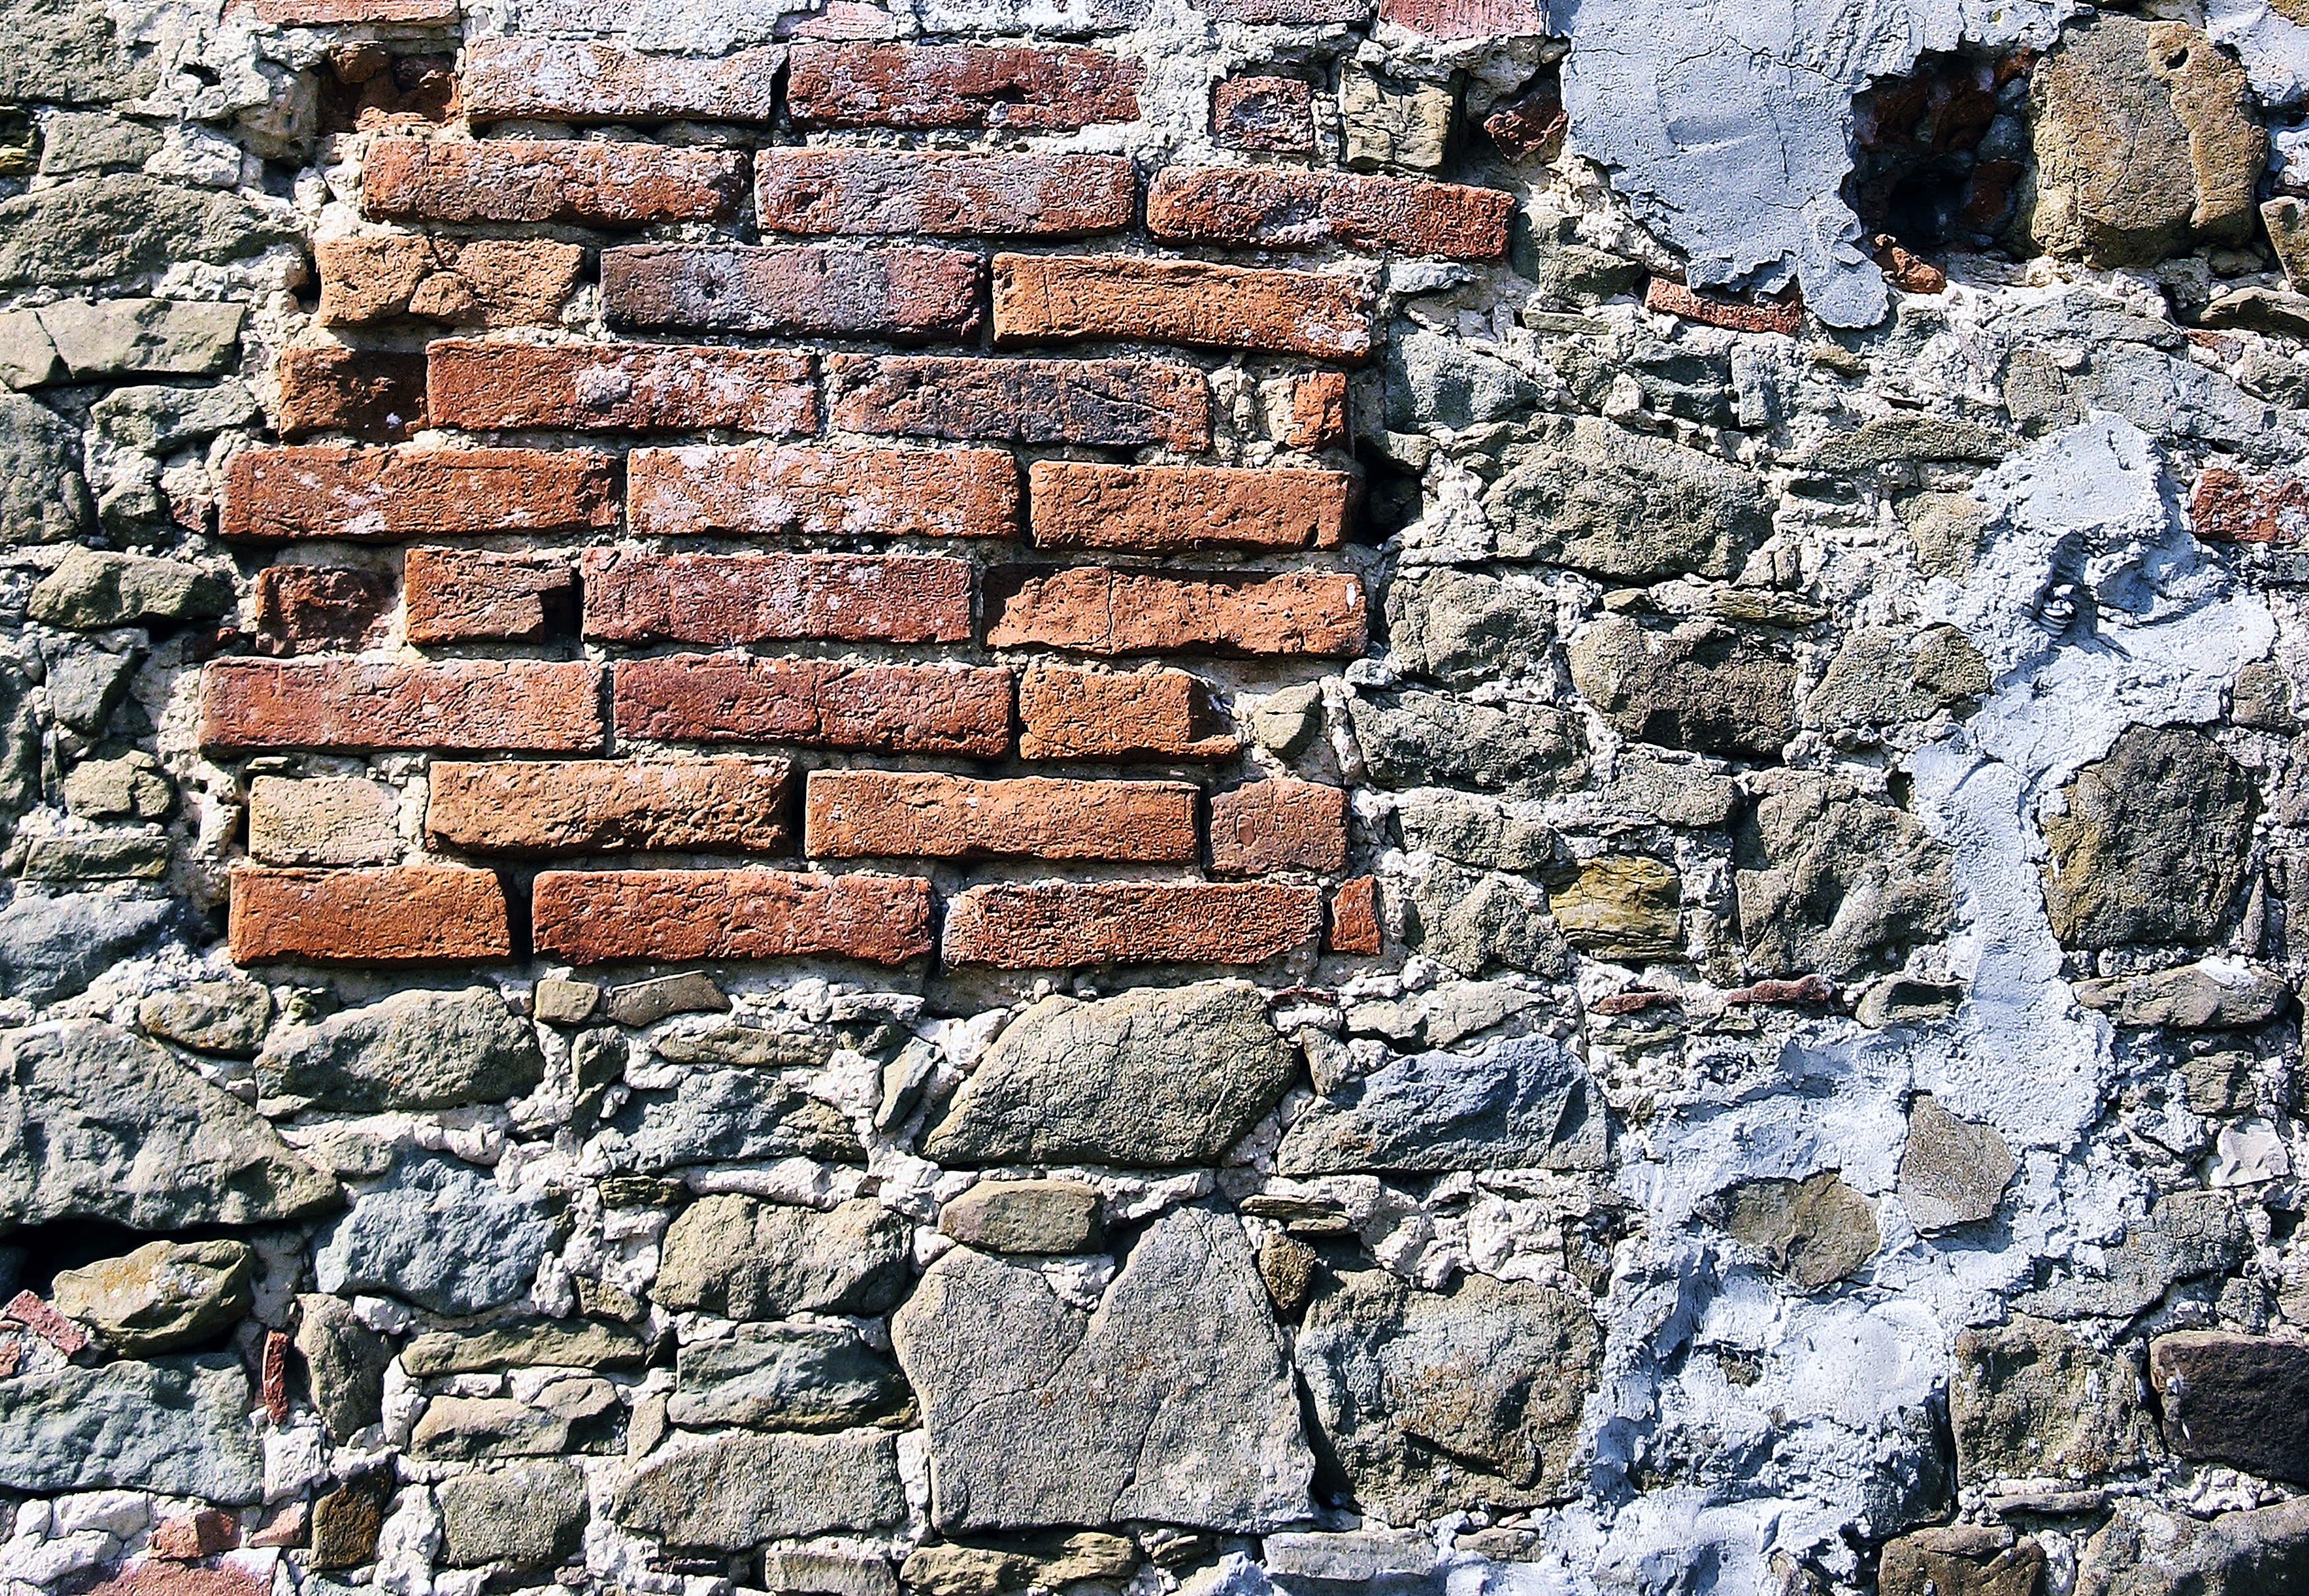 brown and grey brick wall, stone wall, walkway, path, rock, rubble